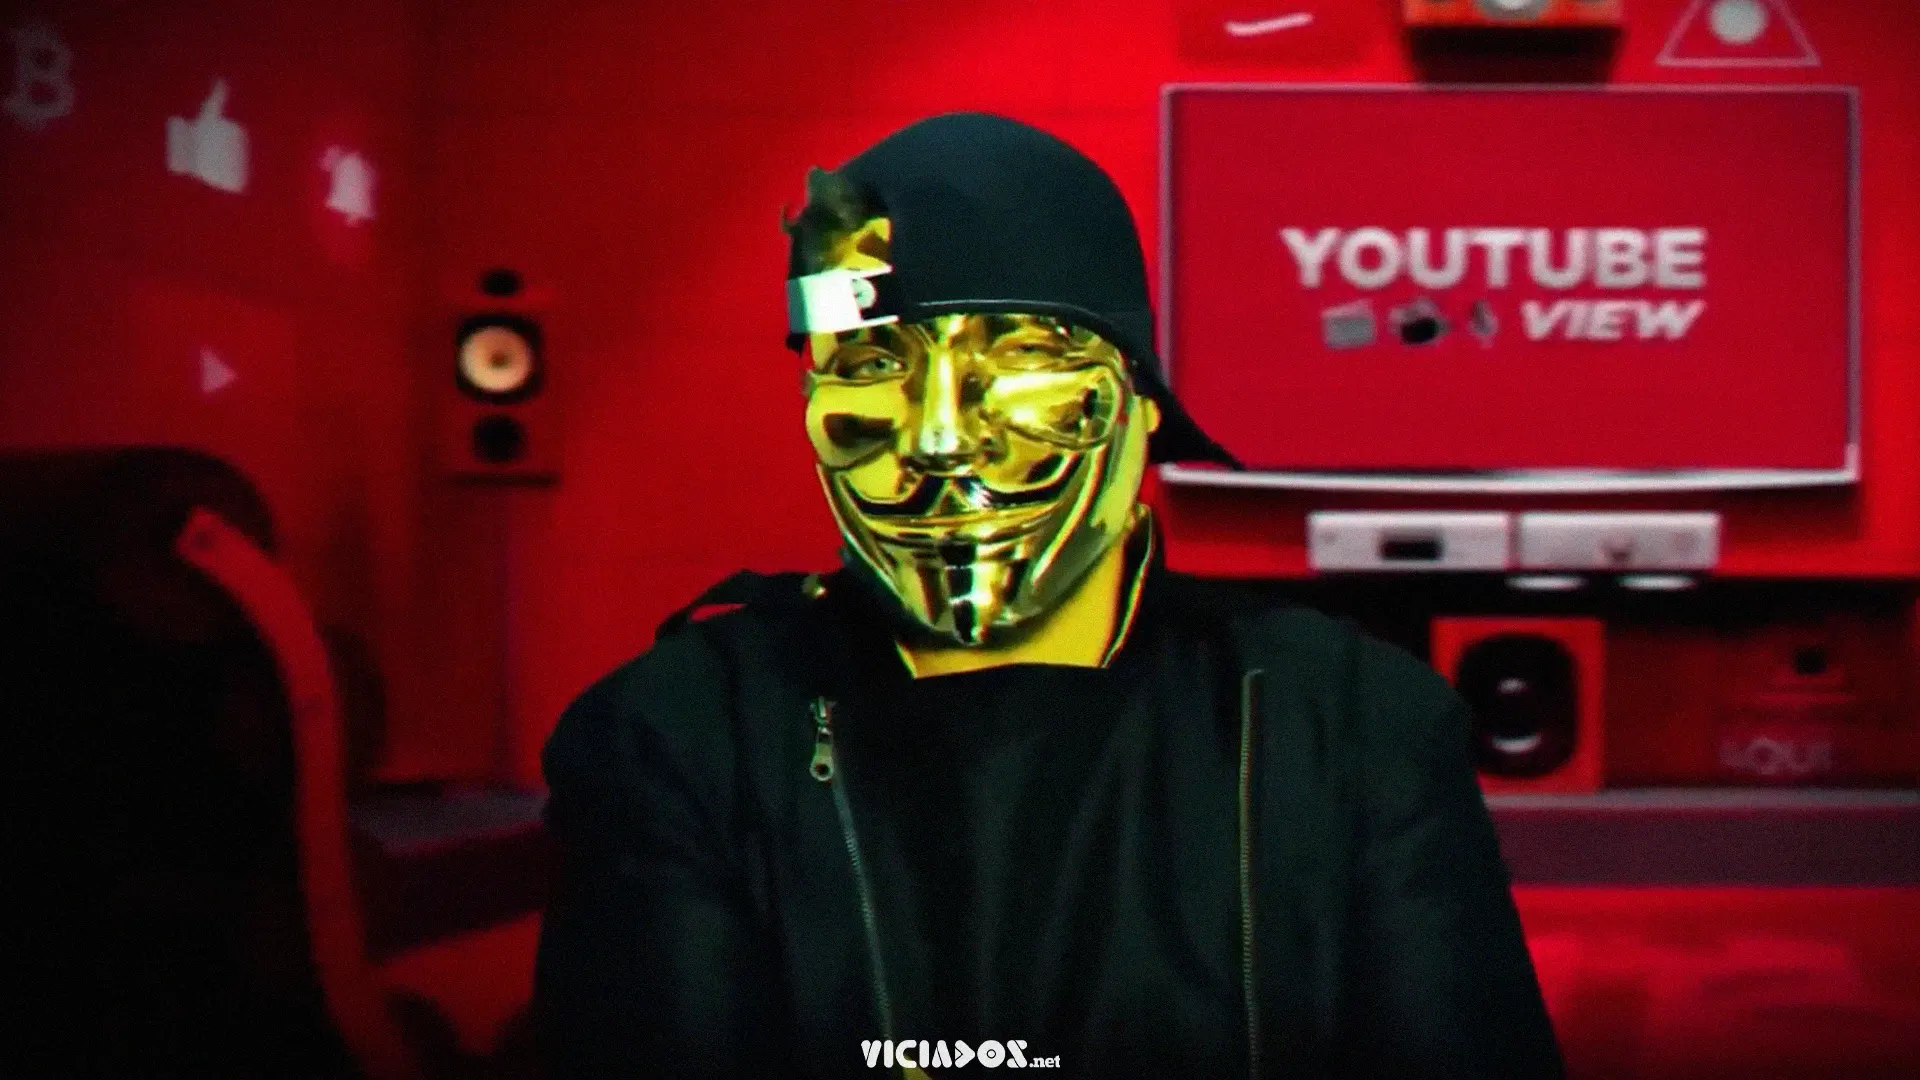 Contente ConTV | Youtuber mascarado finalmente revela o rosto 2024 Portal Viciados